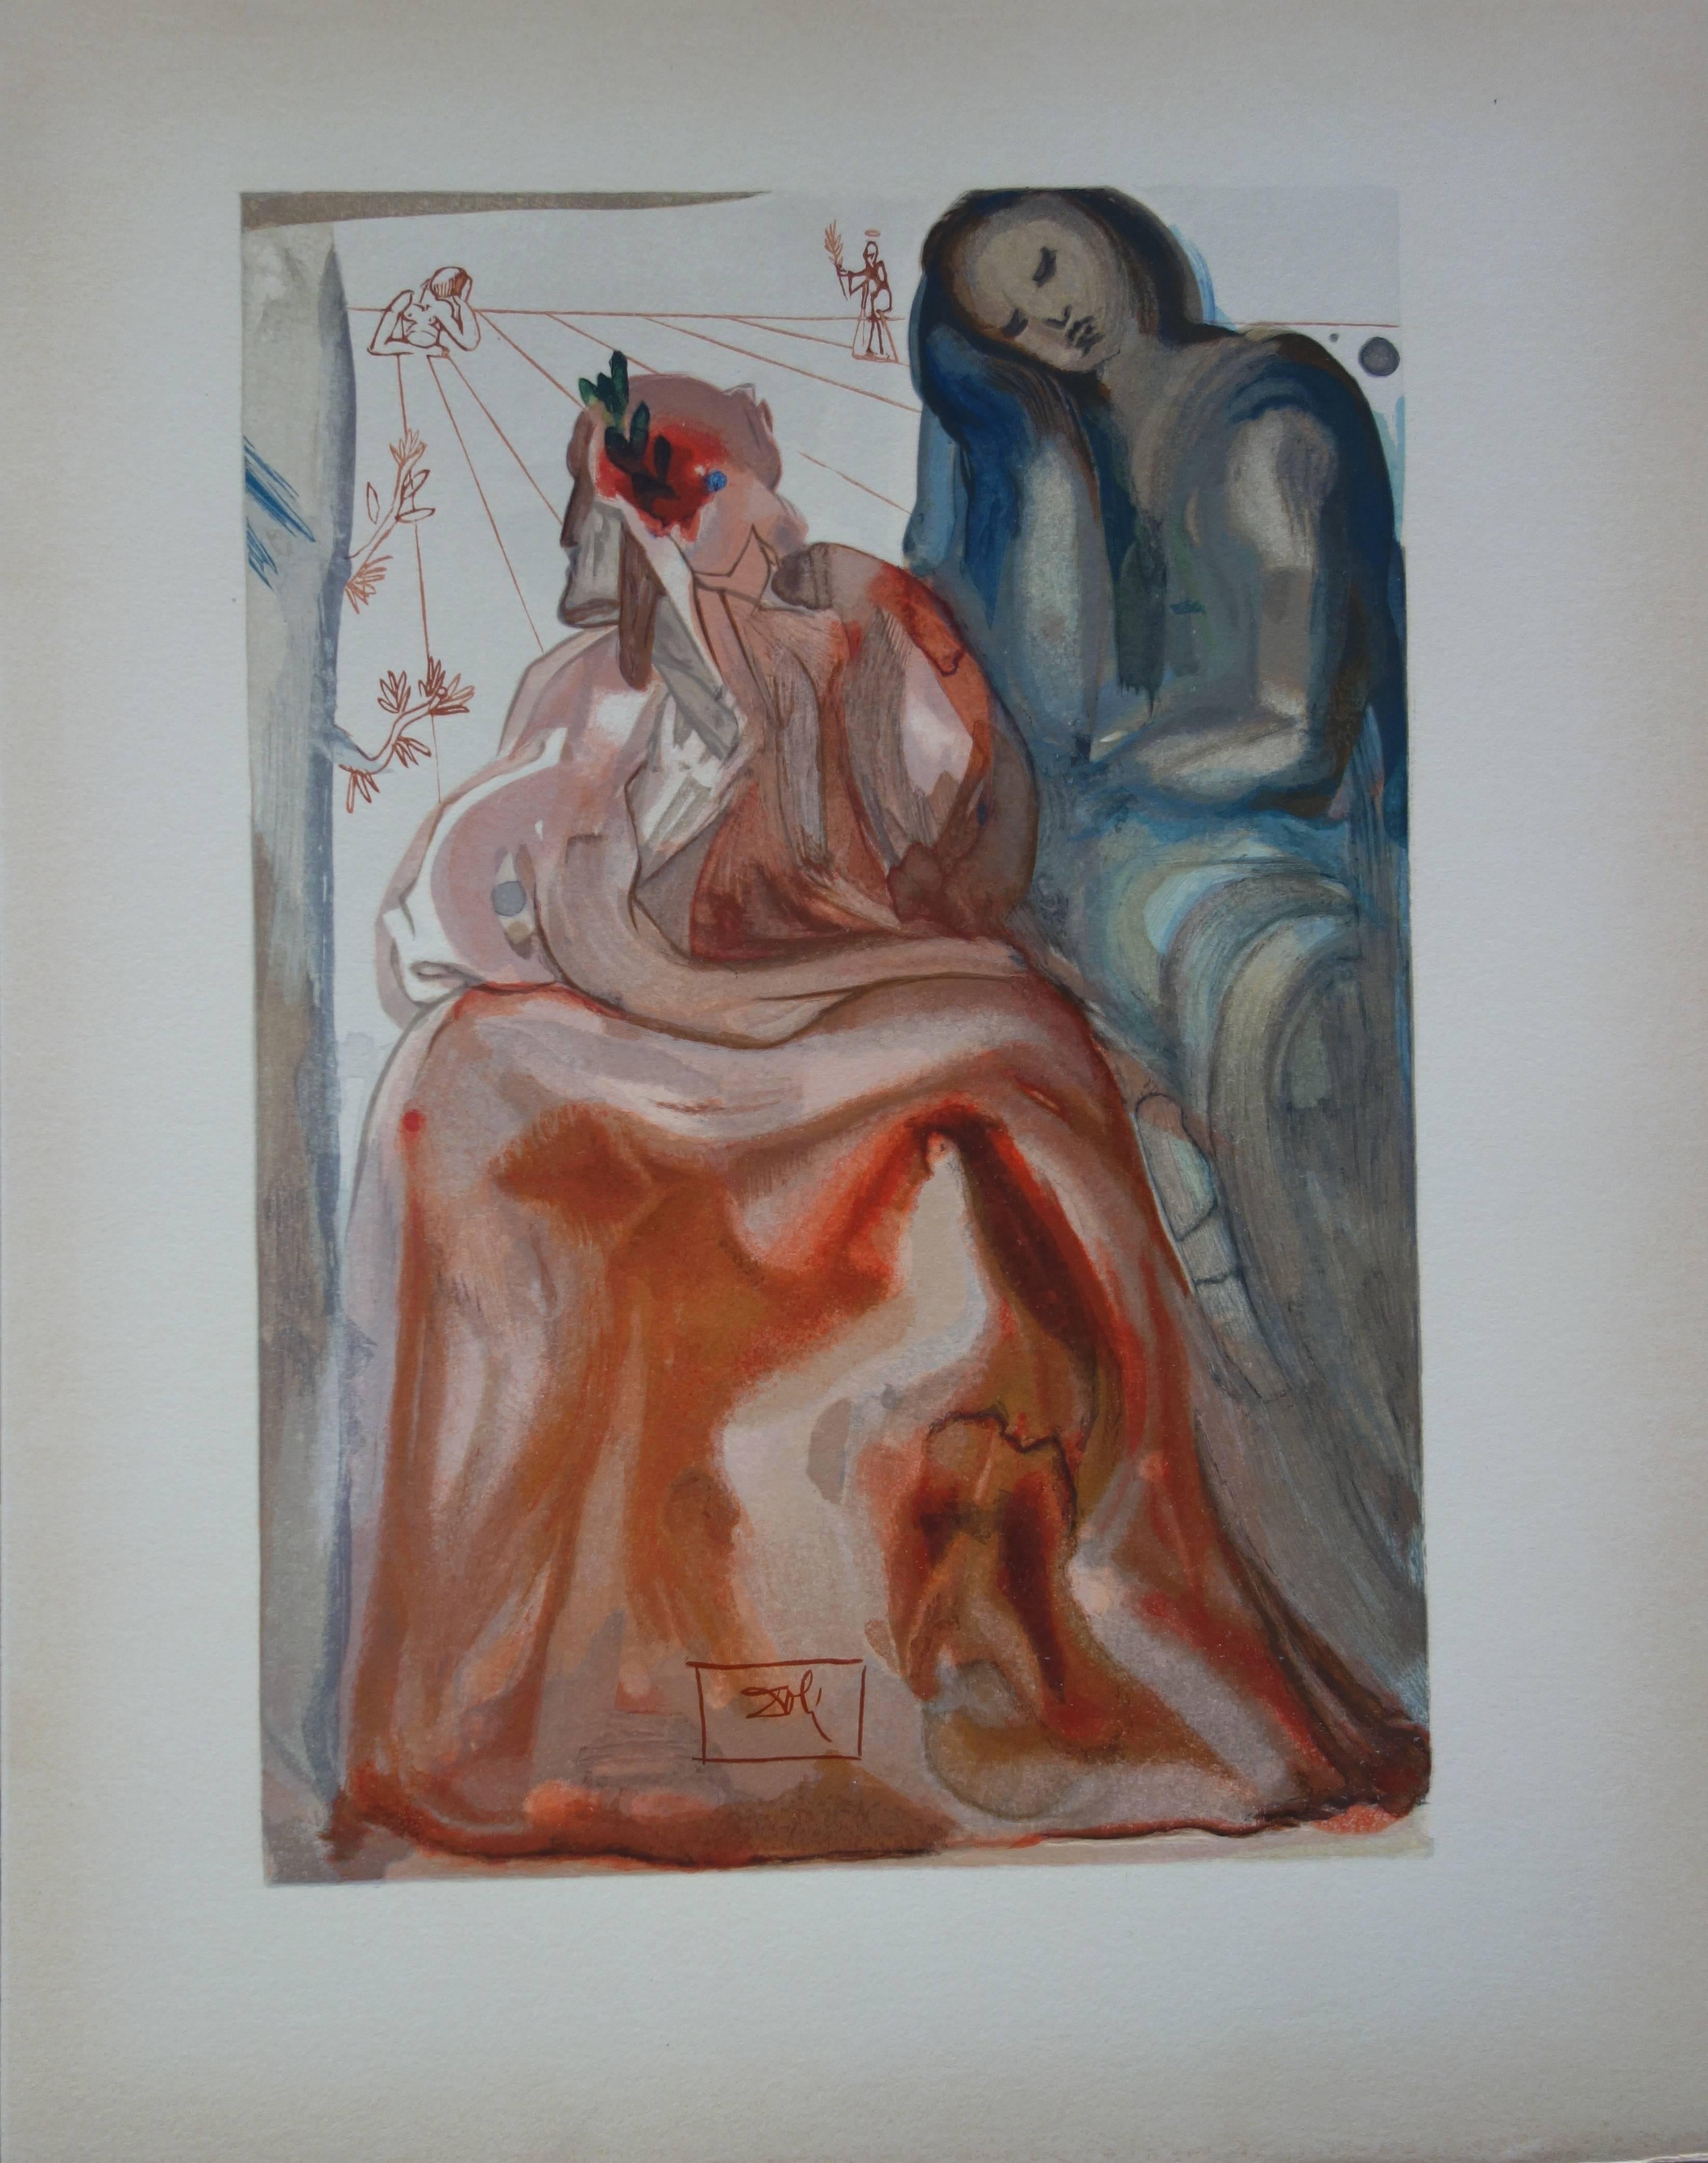 Salvador Dalí Figurative Print - Purgatory 31 - Dante's Confession - Color woodcut - 1963 (Field p. 189)